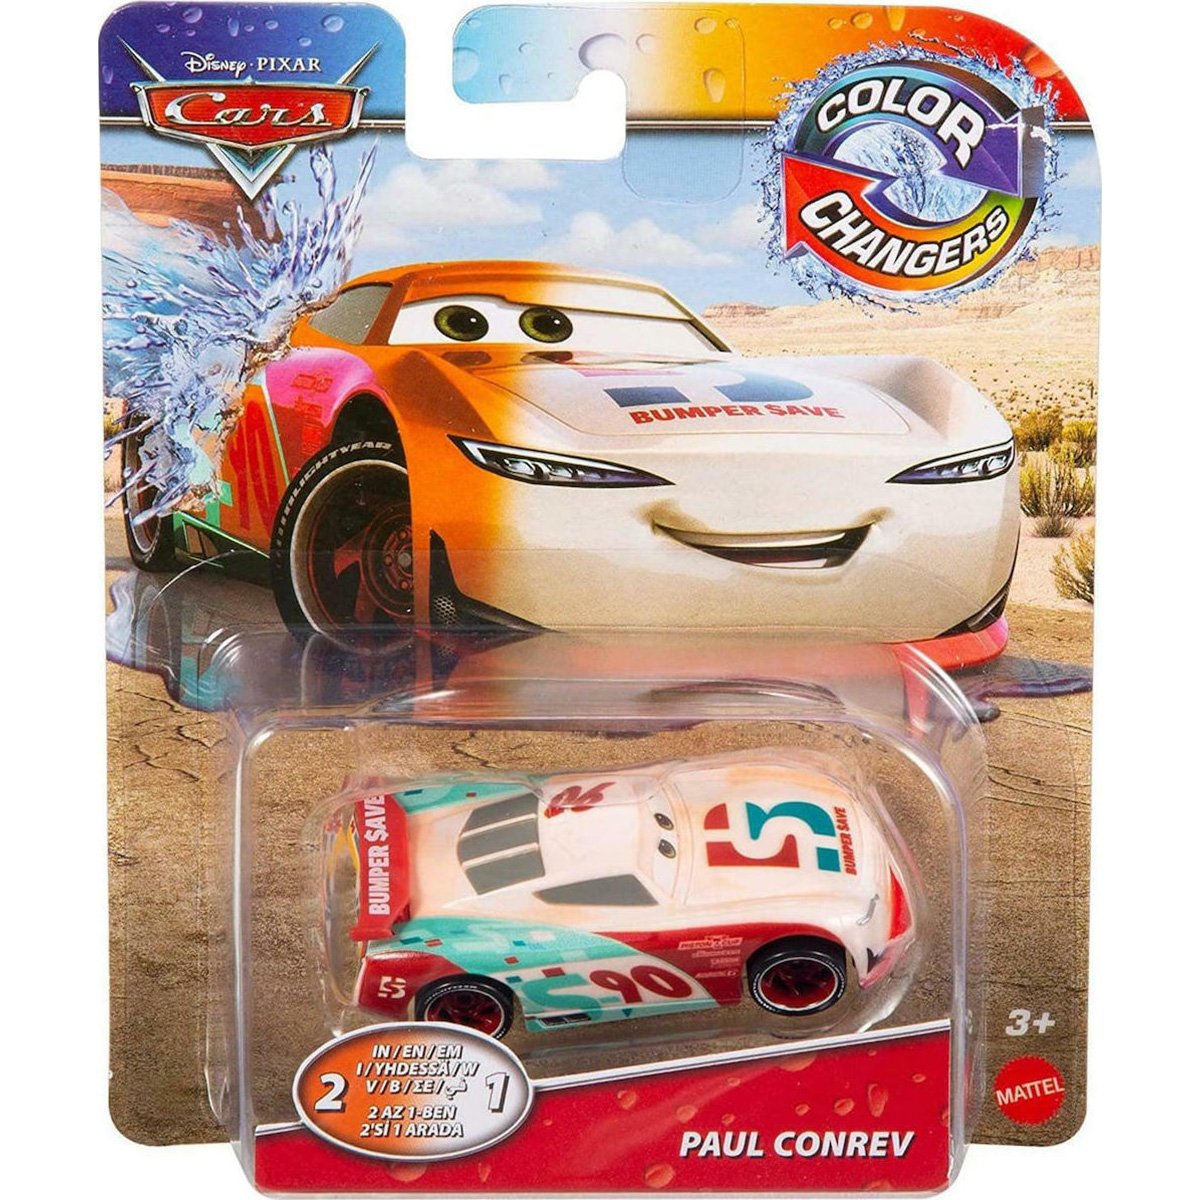 Masinuta Disney Cars, Color Changers, Paul Conrev, 1:55, GPB00 Masinute 2023-09-21